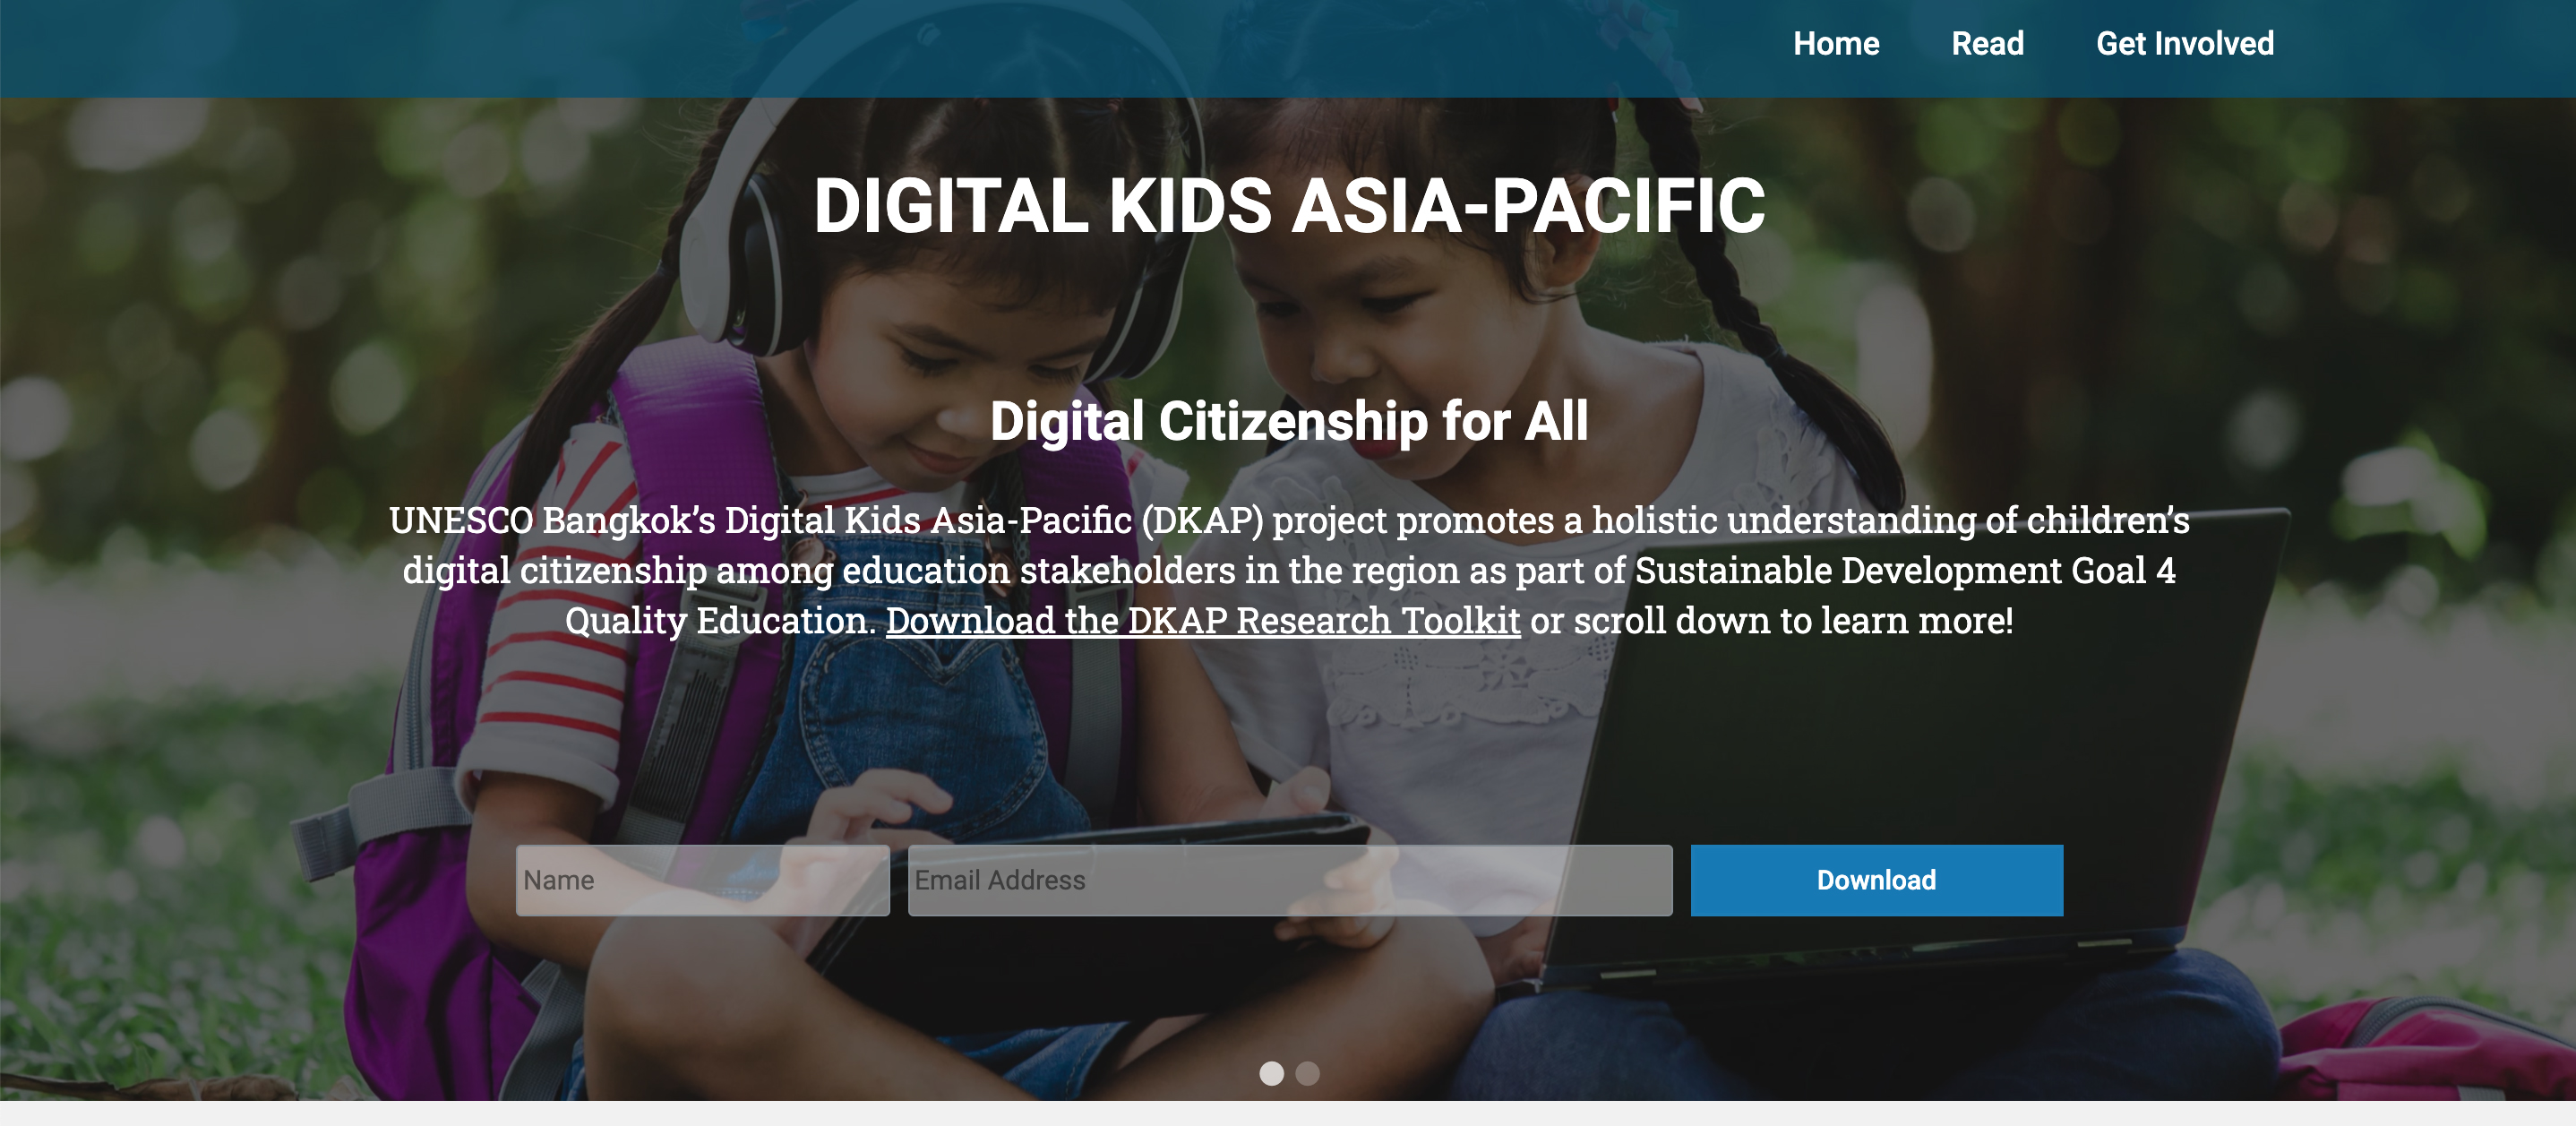 Digital Kids Asia-Pacific